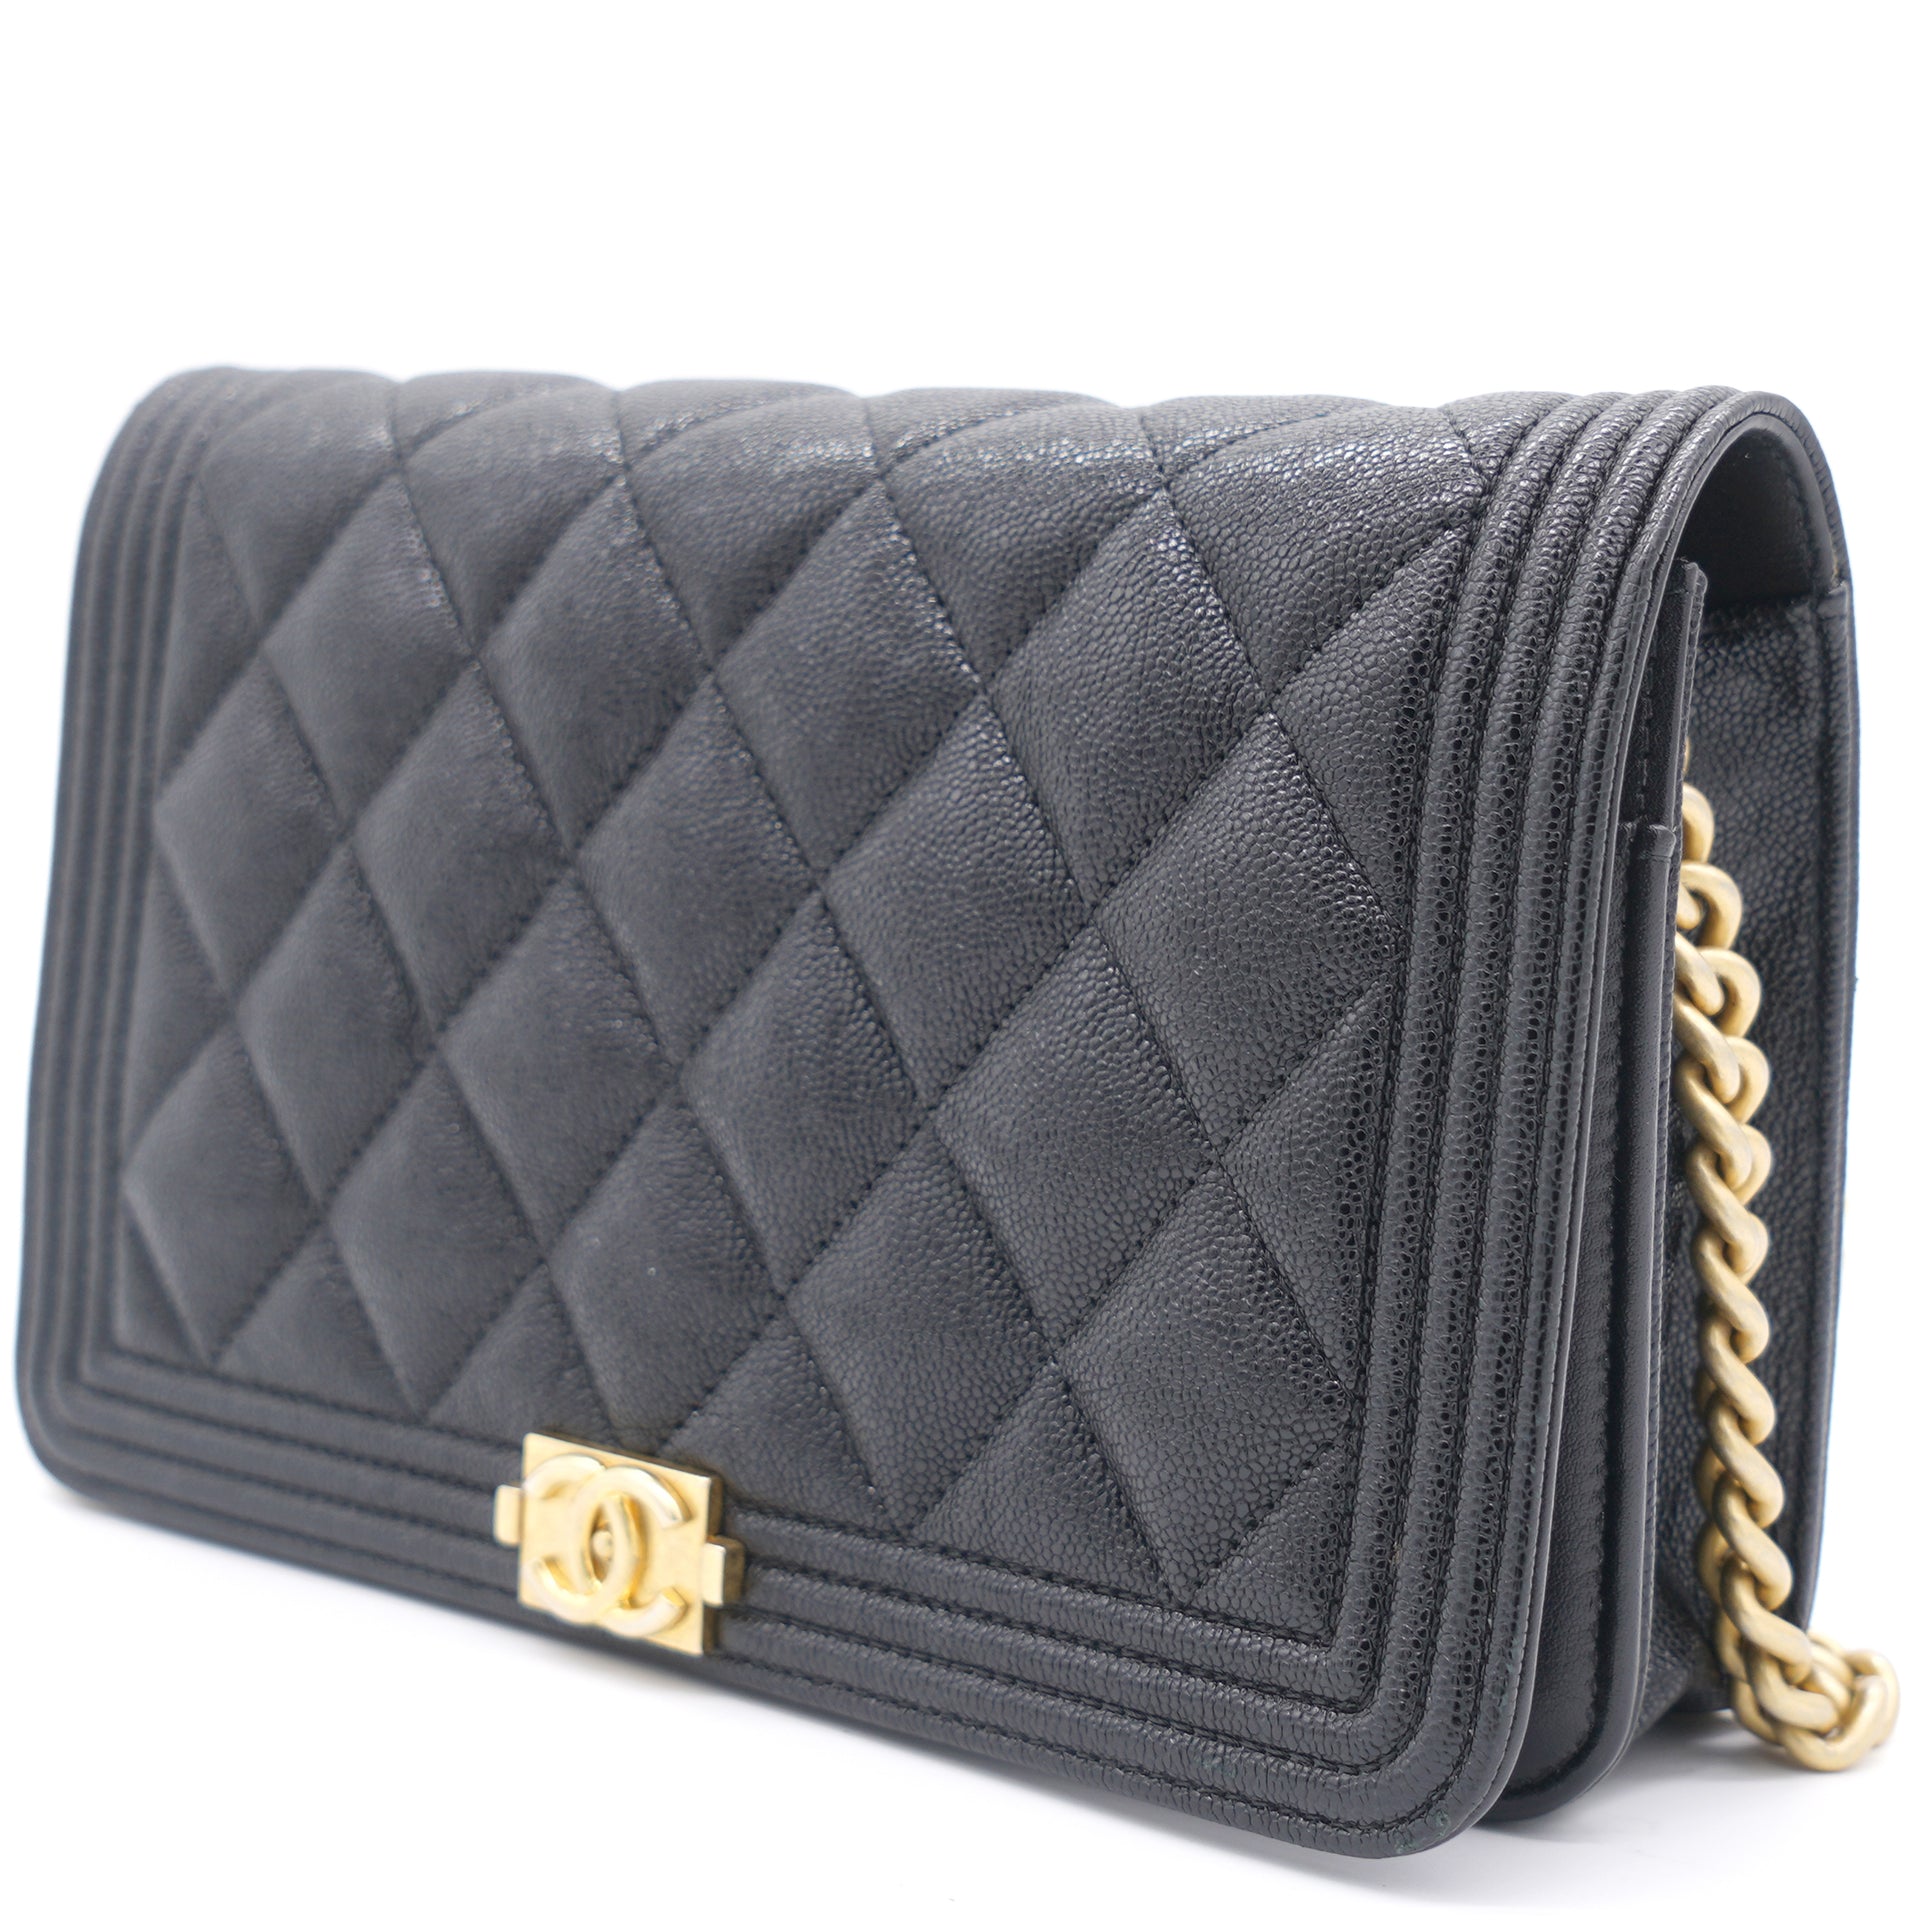 Chanel Boy Wallet on Chain - Black Caviar Handbag